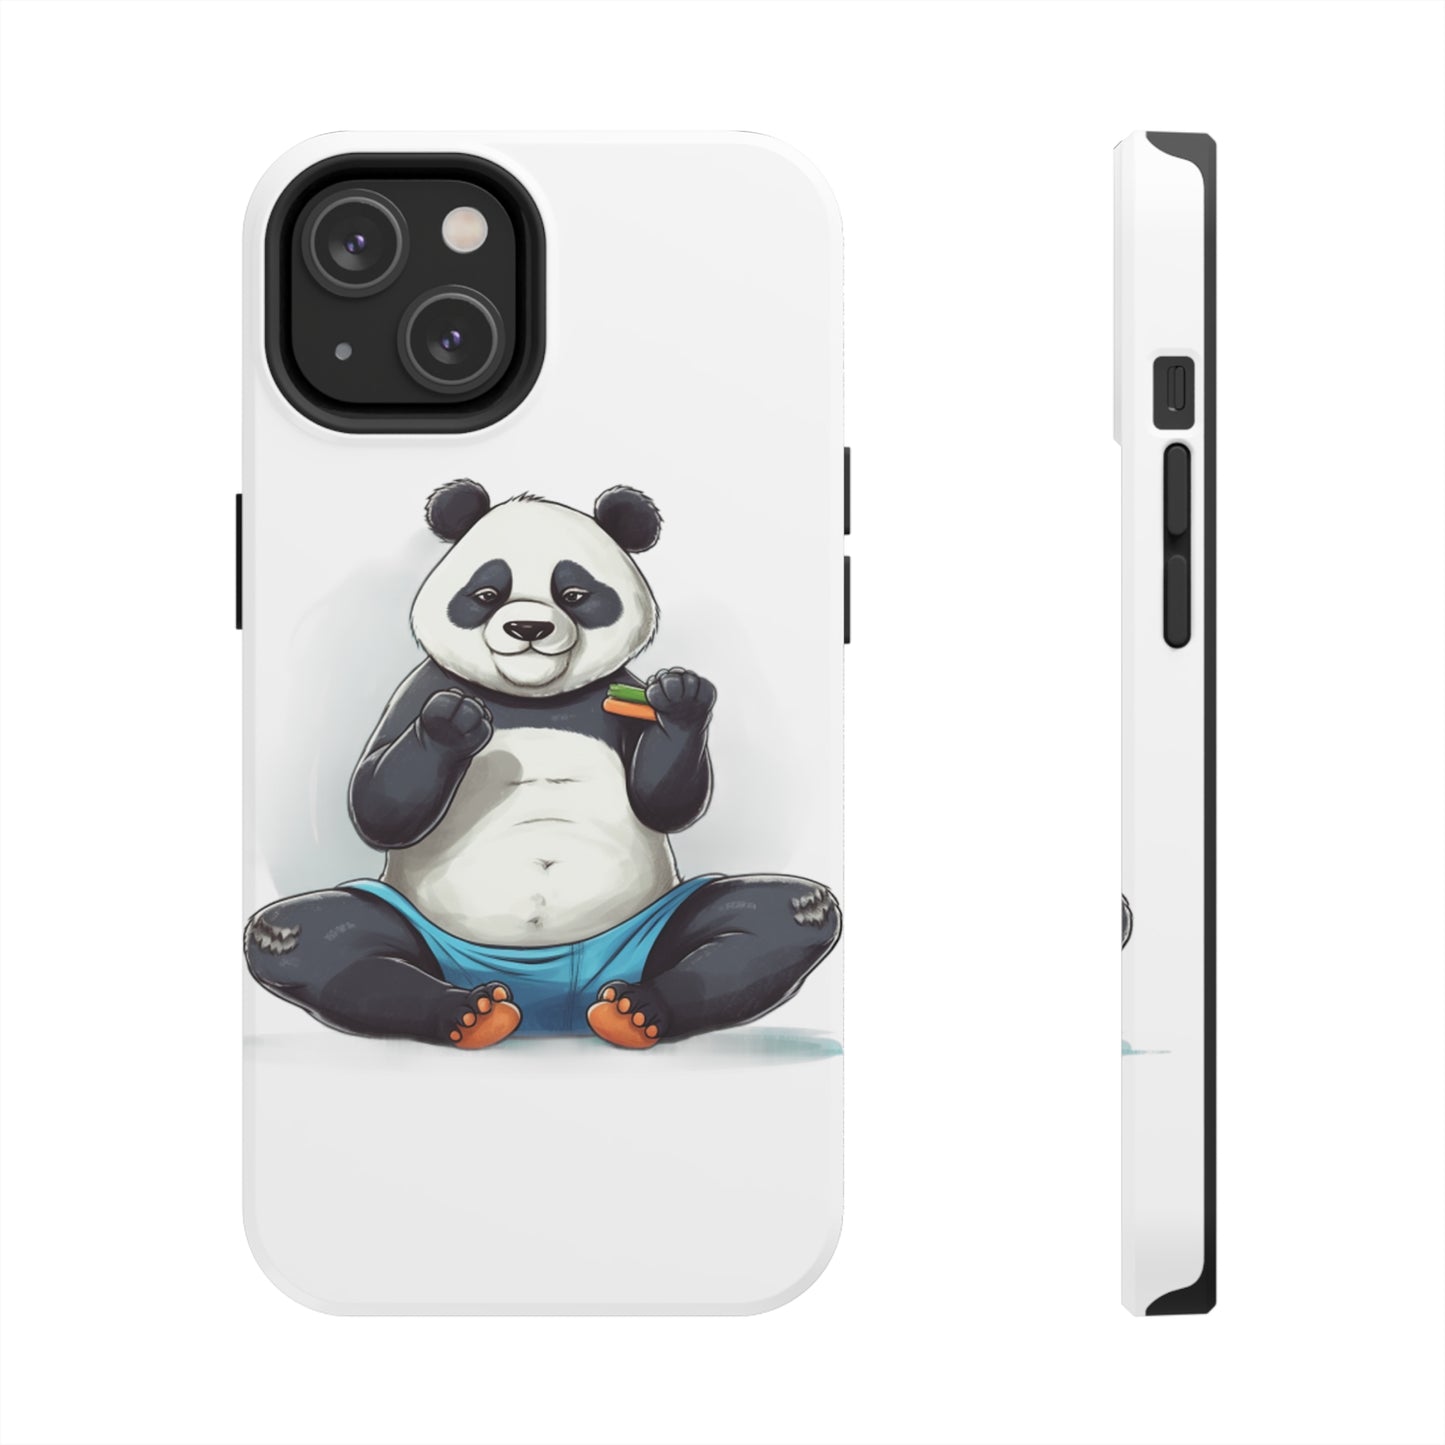 Panda Power: The Ultimate Tough Phone Case